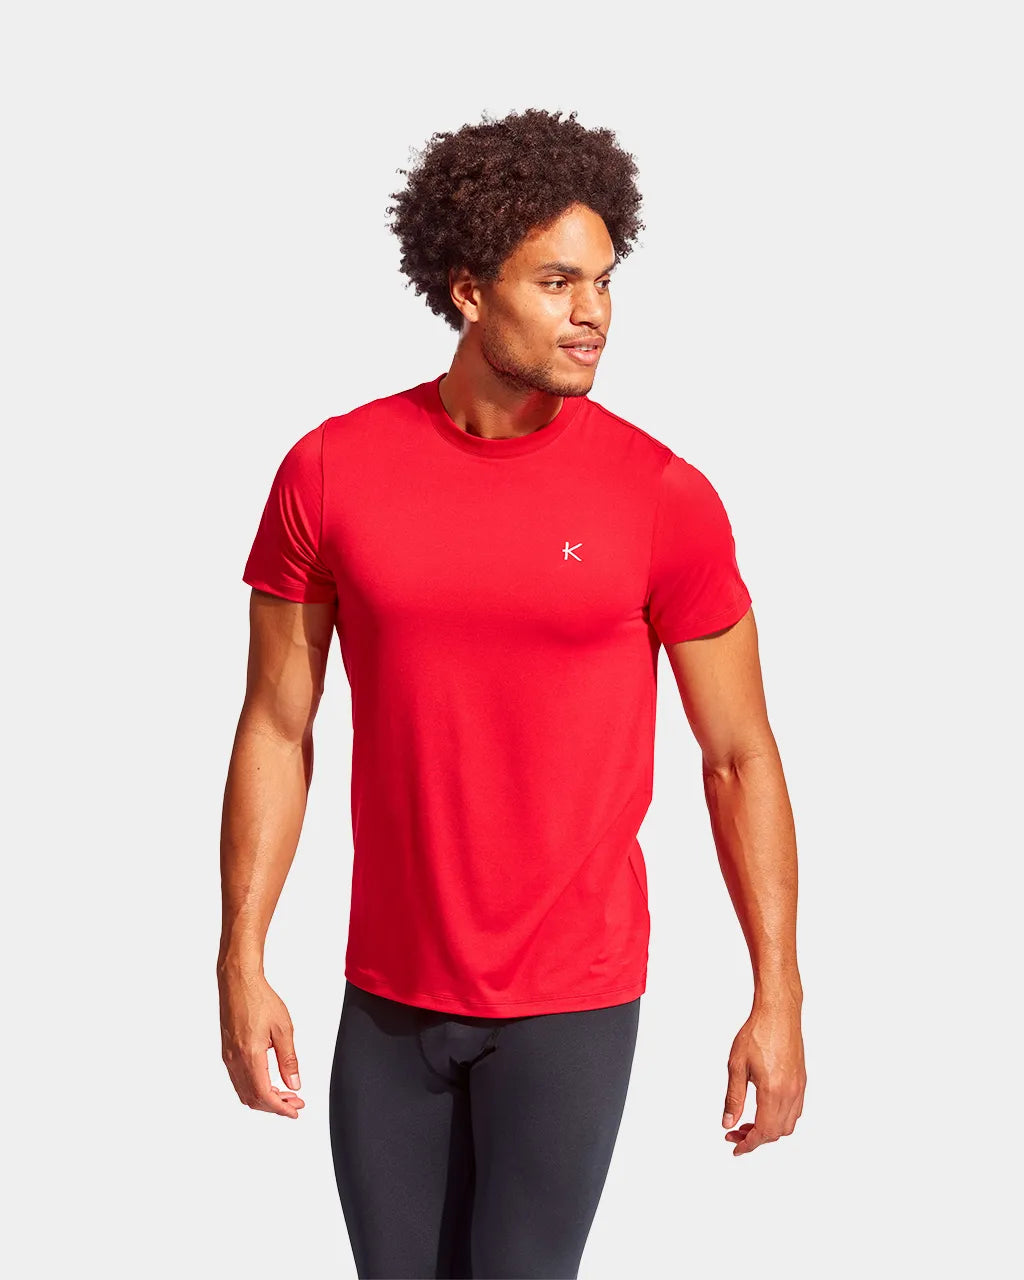 KYMIRA RECHARGE Infrared T-Shirt - Red